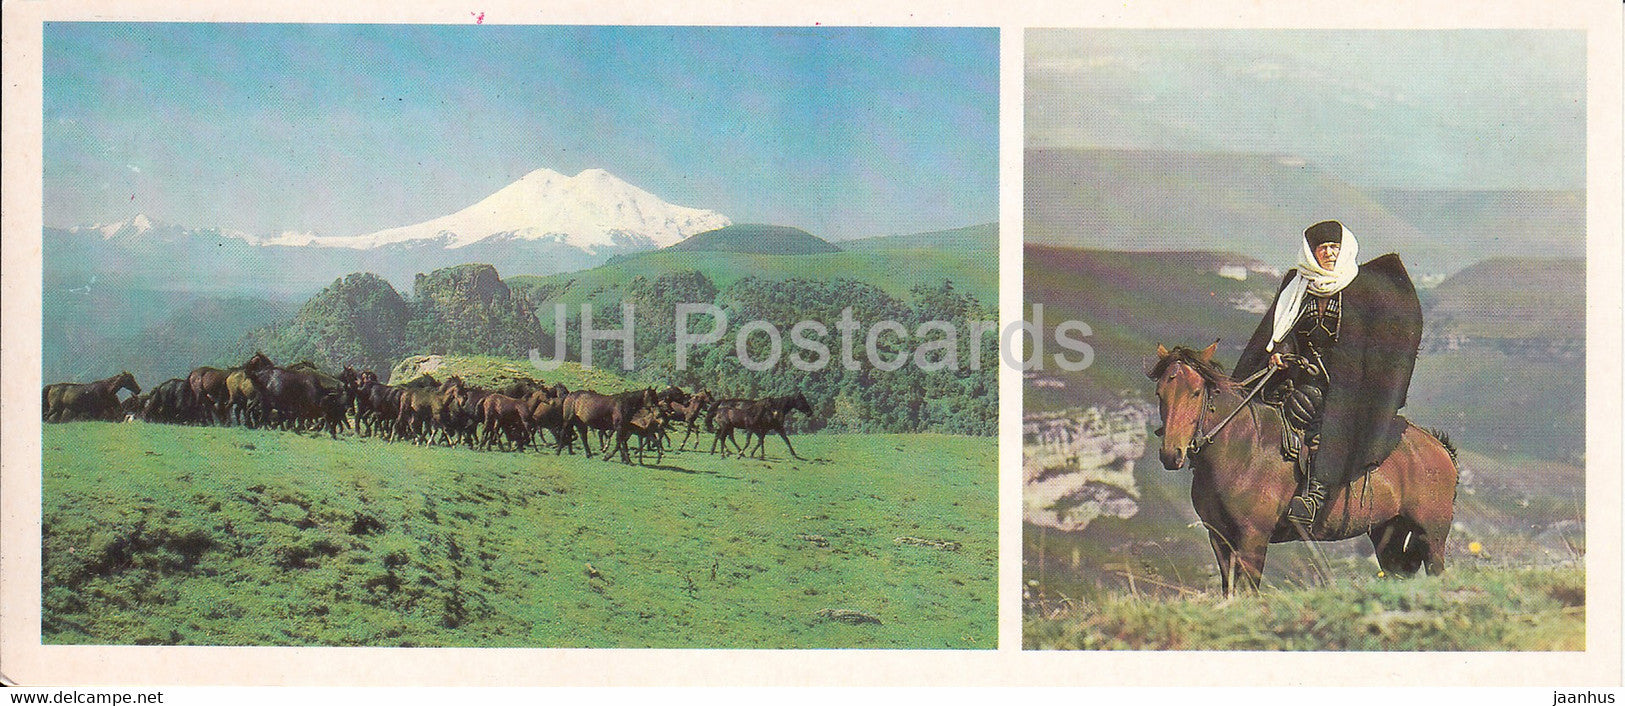 Kabardino Balkaria - up in the alpine pastures - horse - 1986 - Russia USSR - unused - JH Postcards